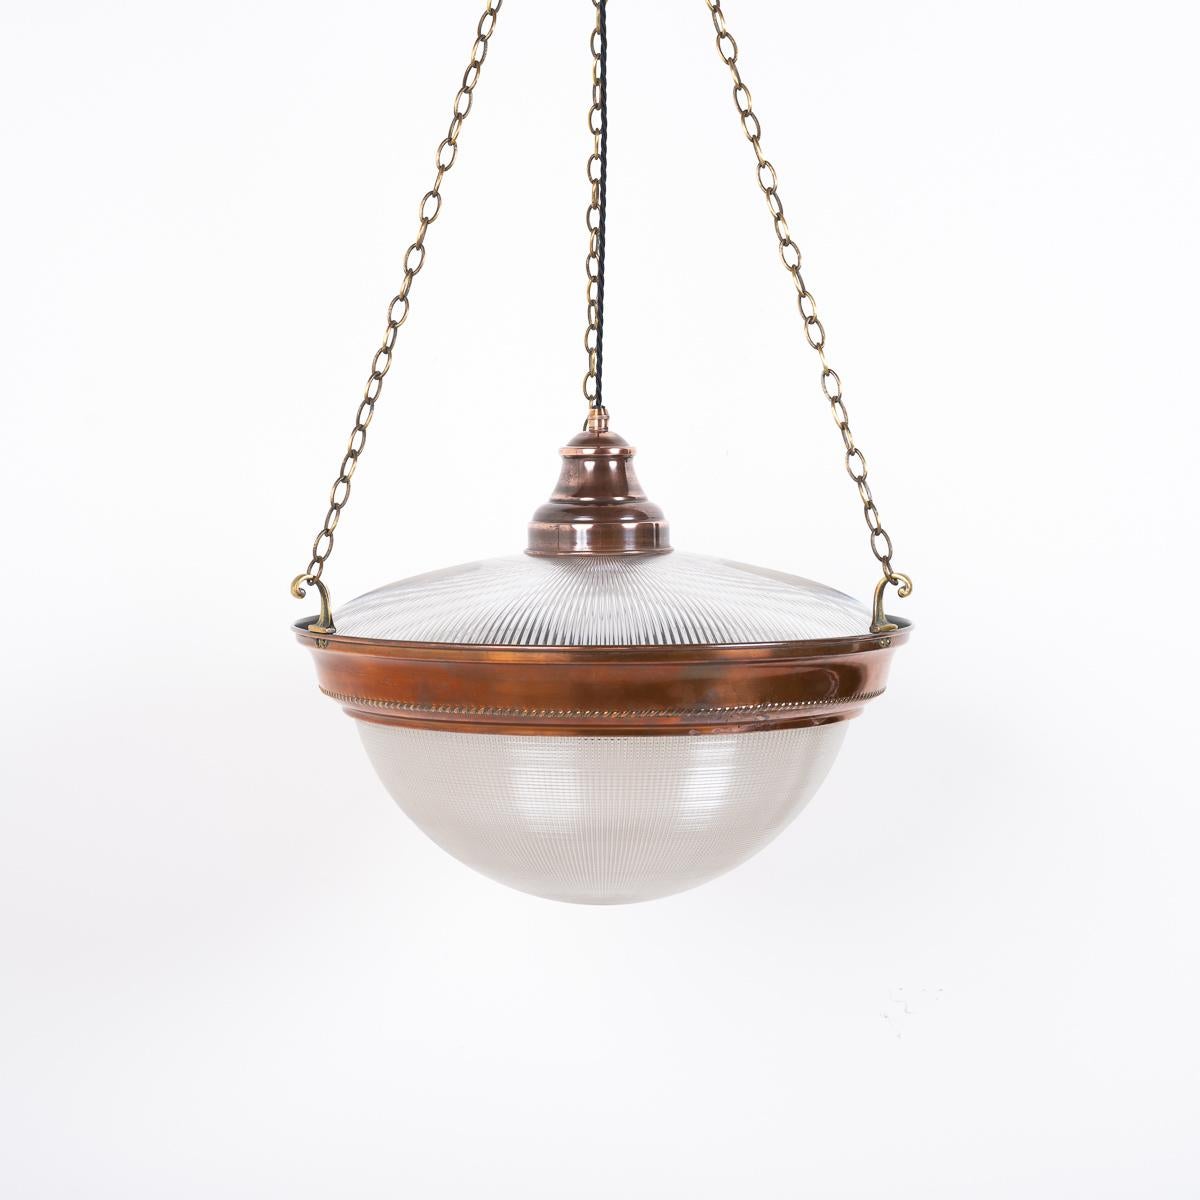 Huge Rare Antique Holophane Blondel Stiletto Bowl Pendant Light Fitting For Sale 2